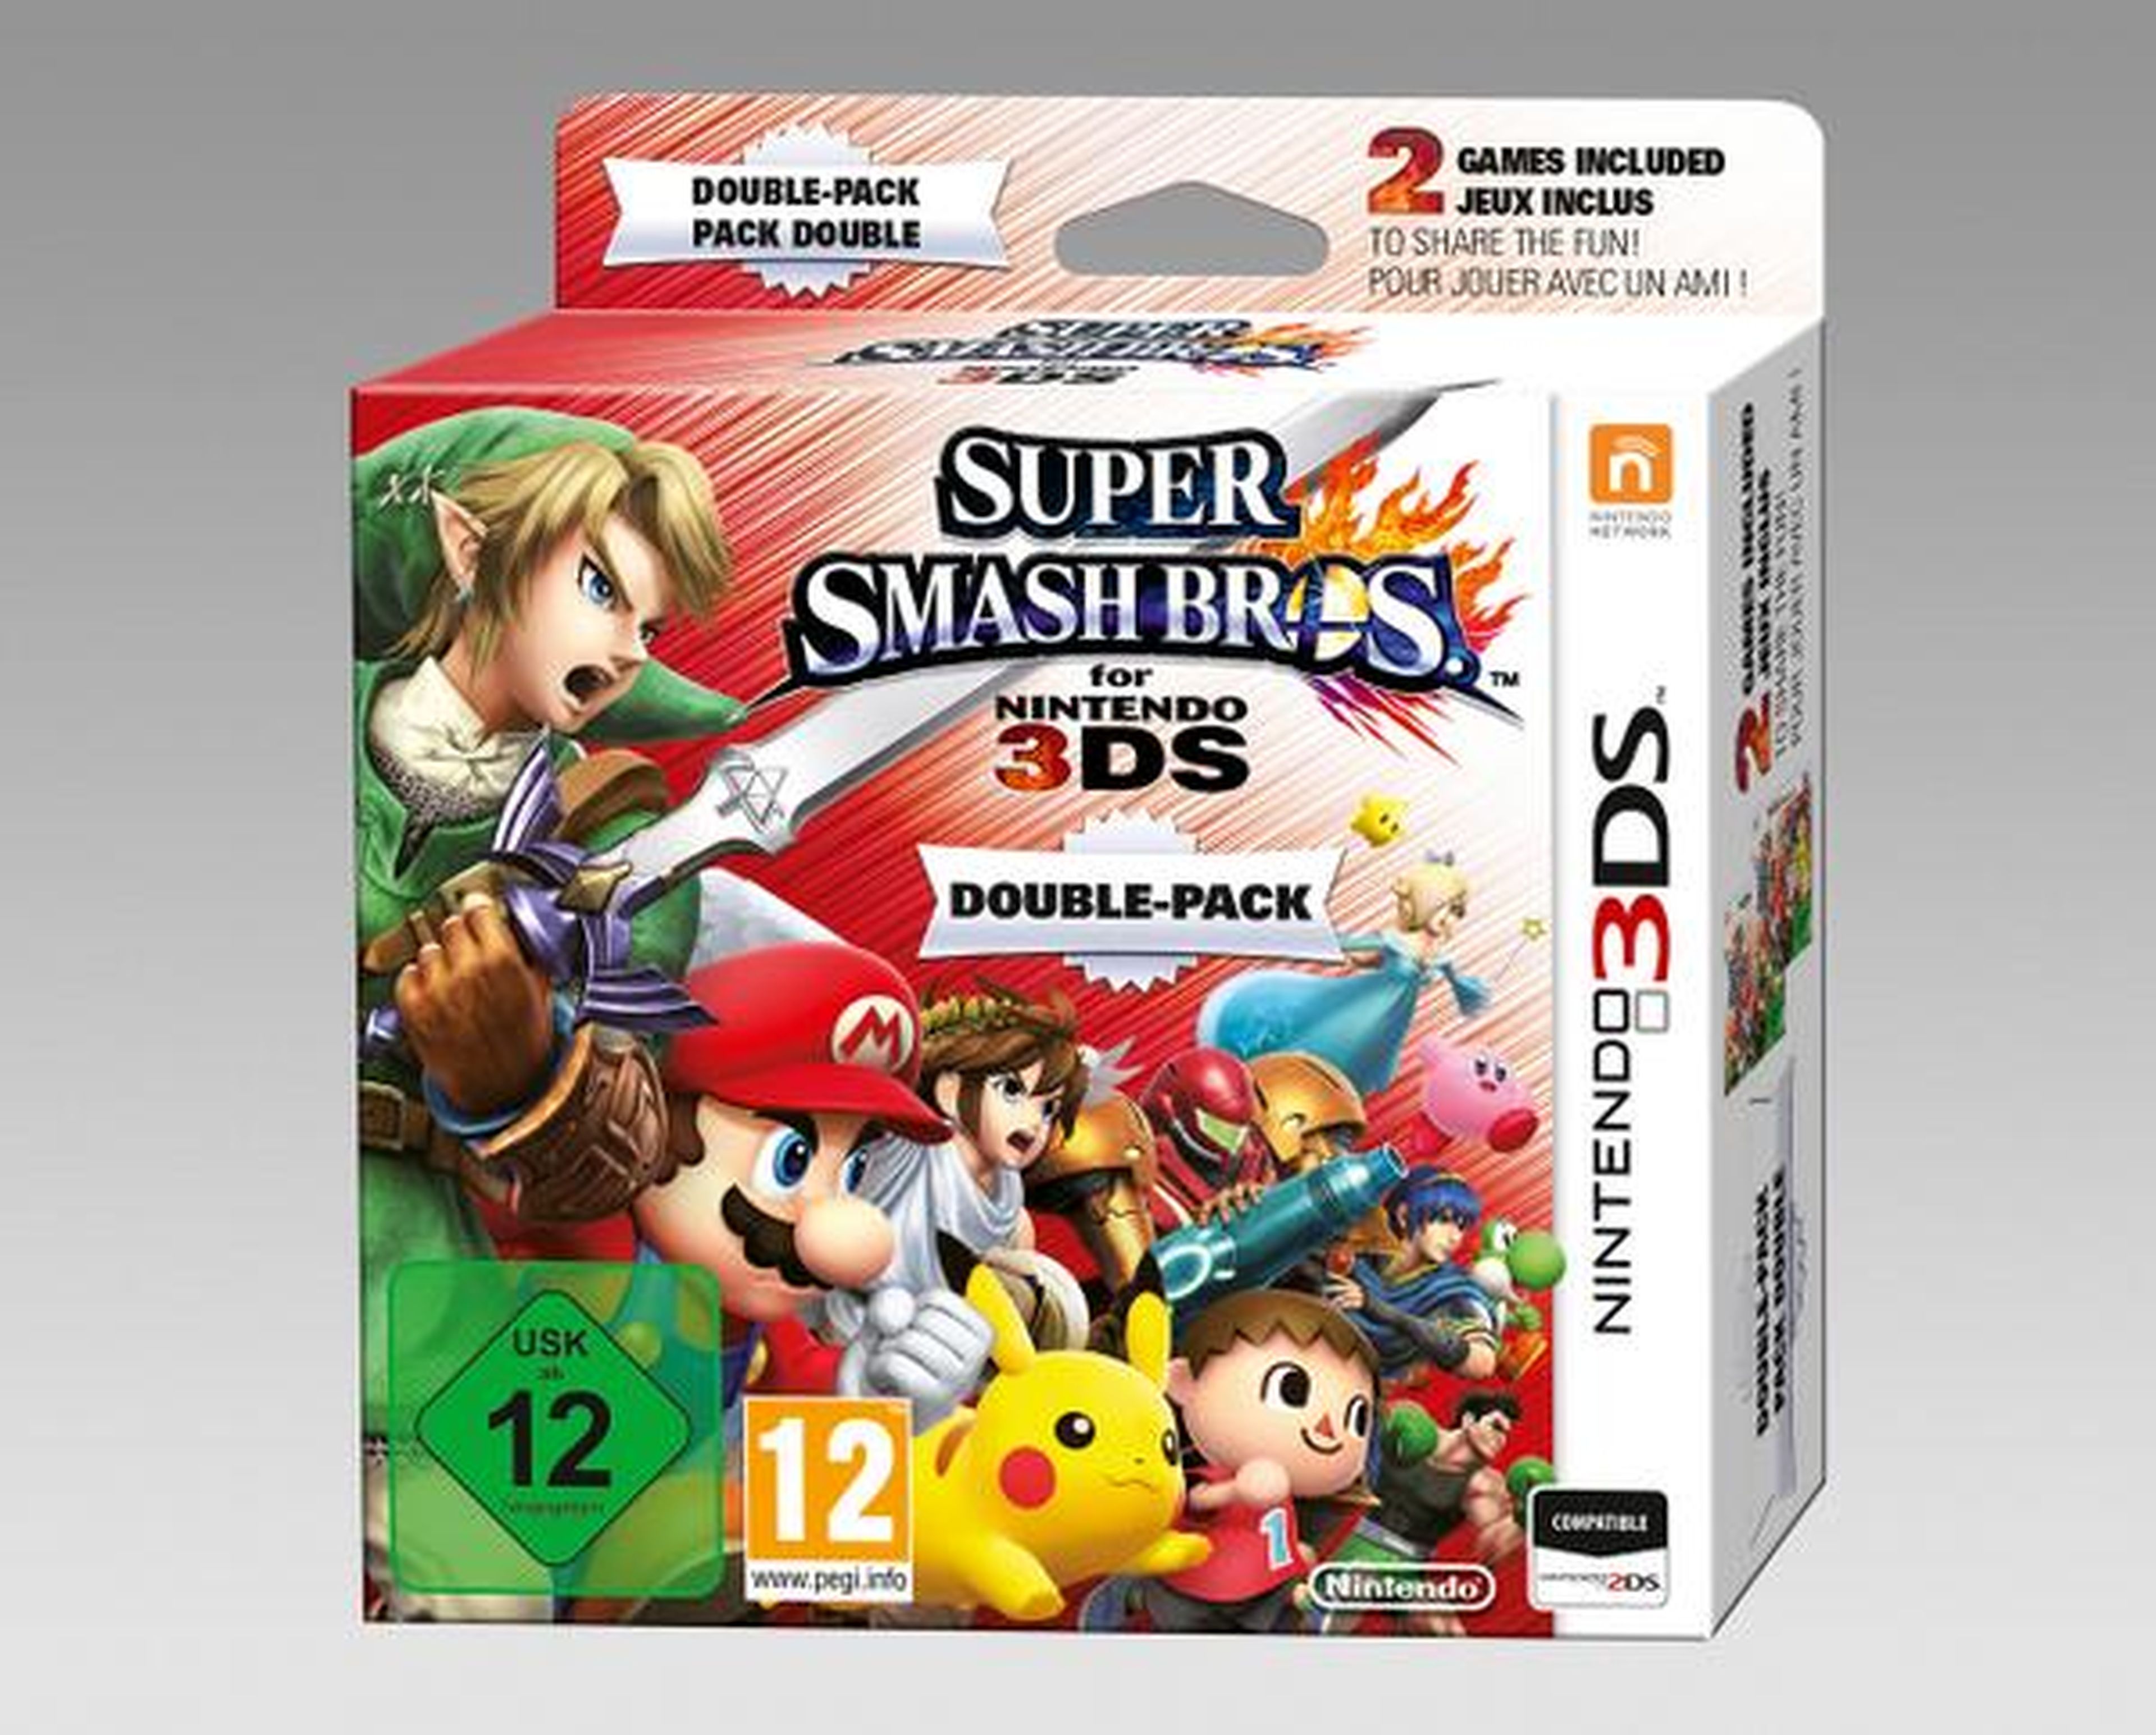 Un pack con dos copias de Super Smash Bros. 3DS llegará a España